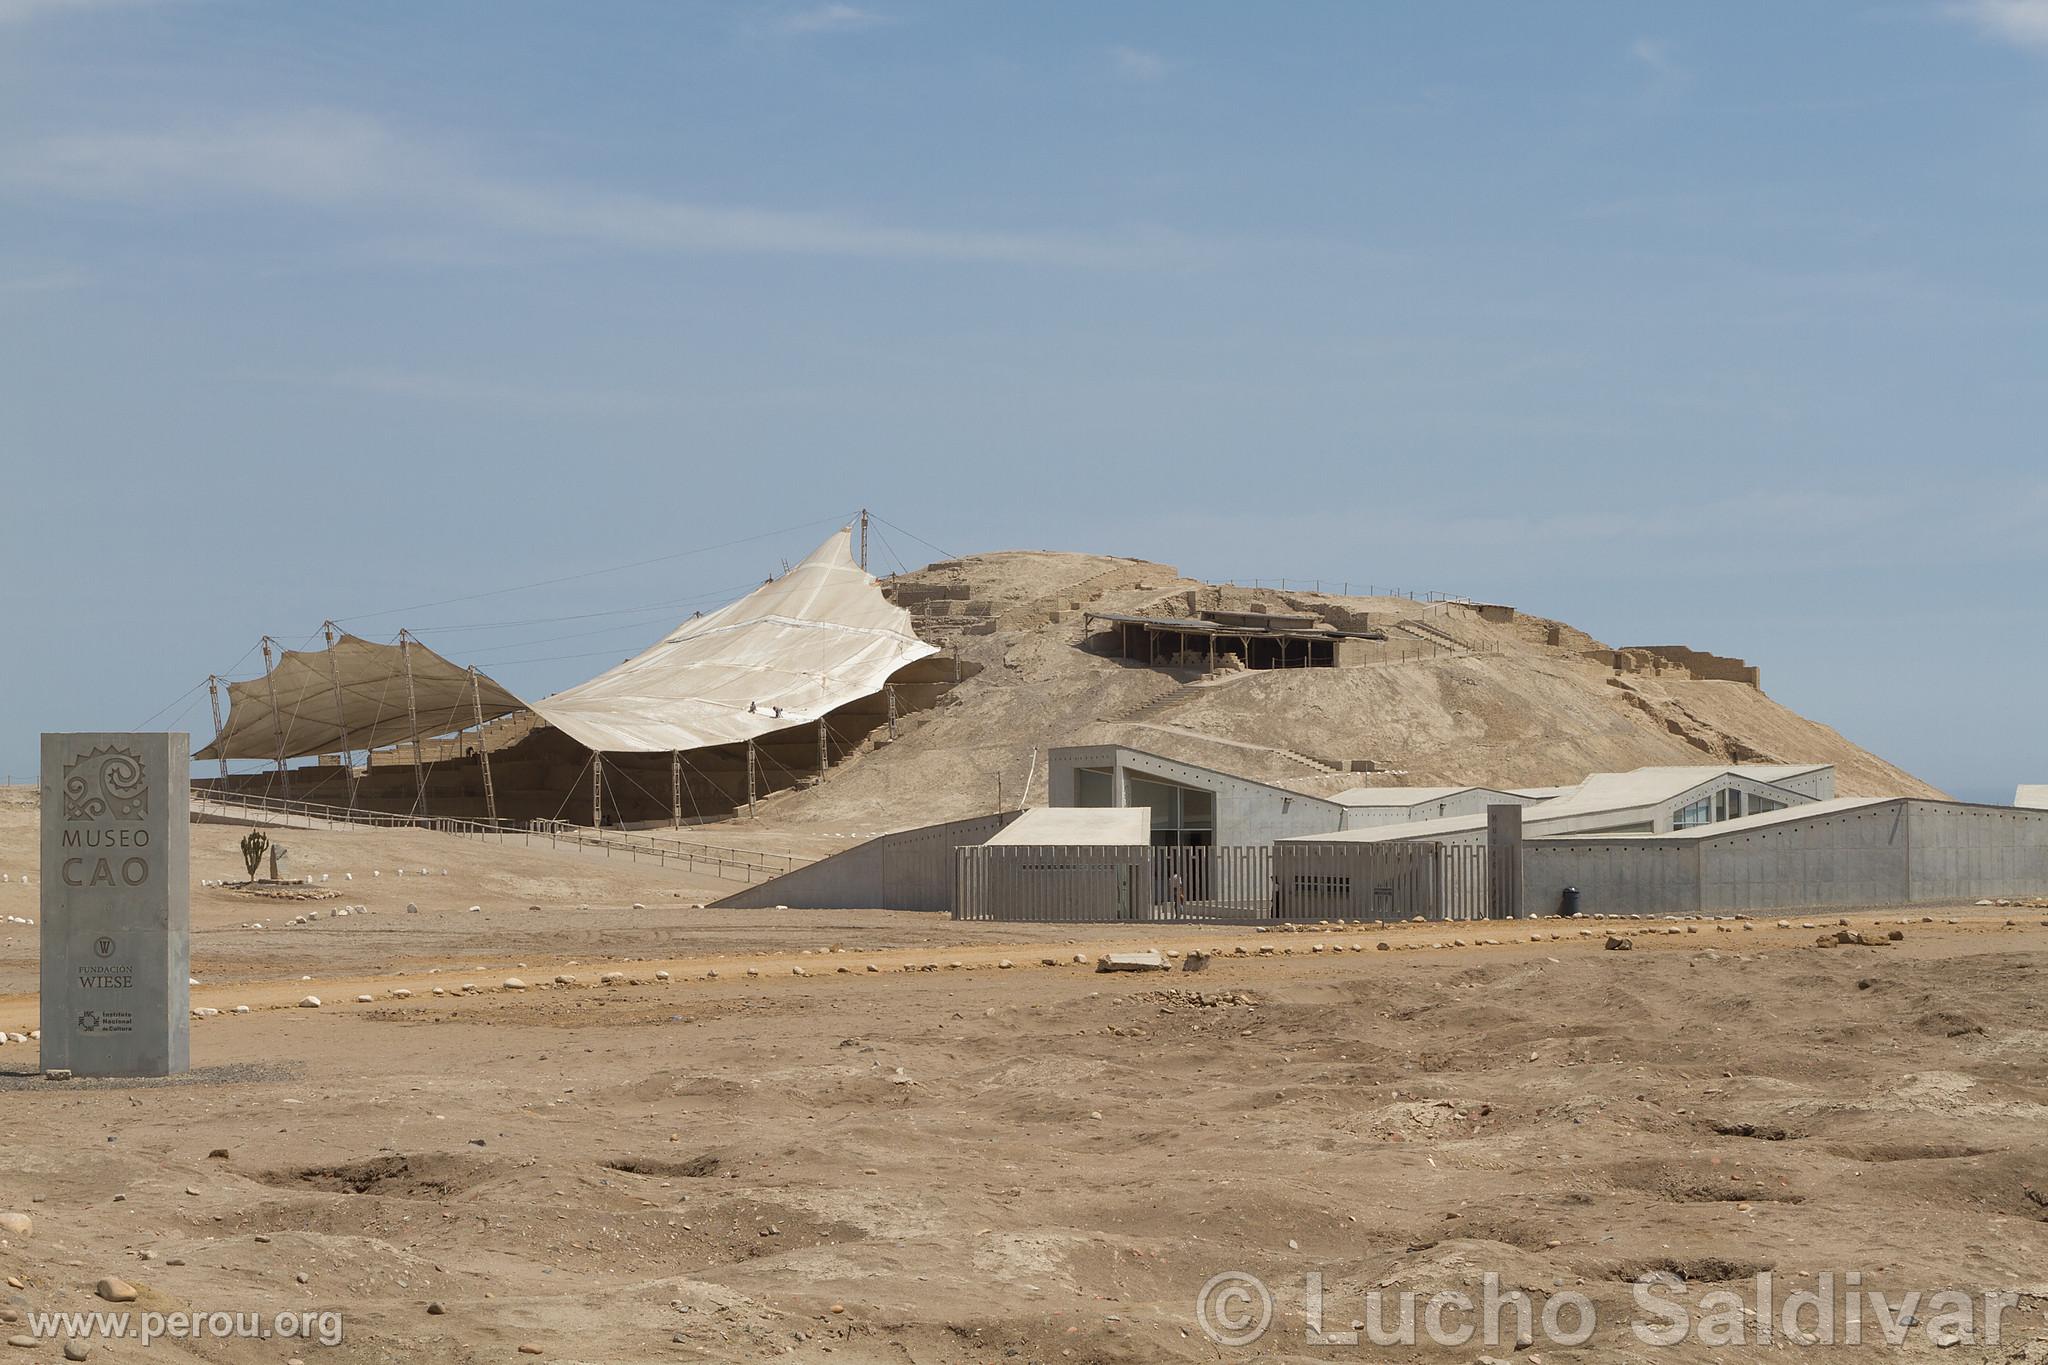 Complexe archéologique El Brujo et Musée Cao, Trujillo